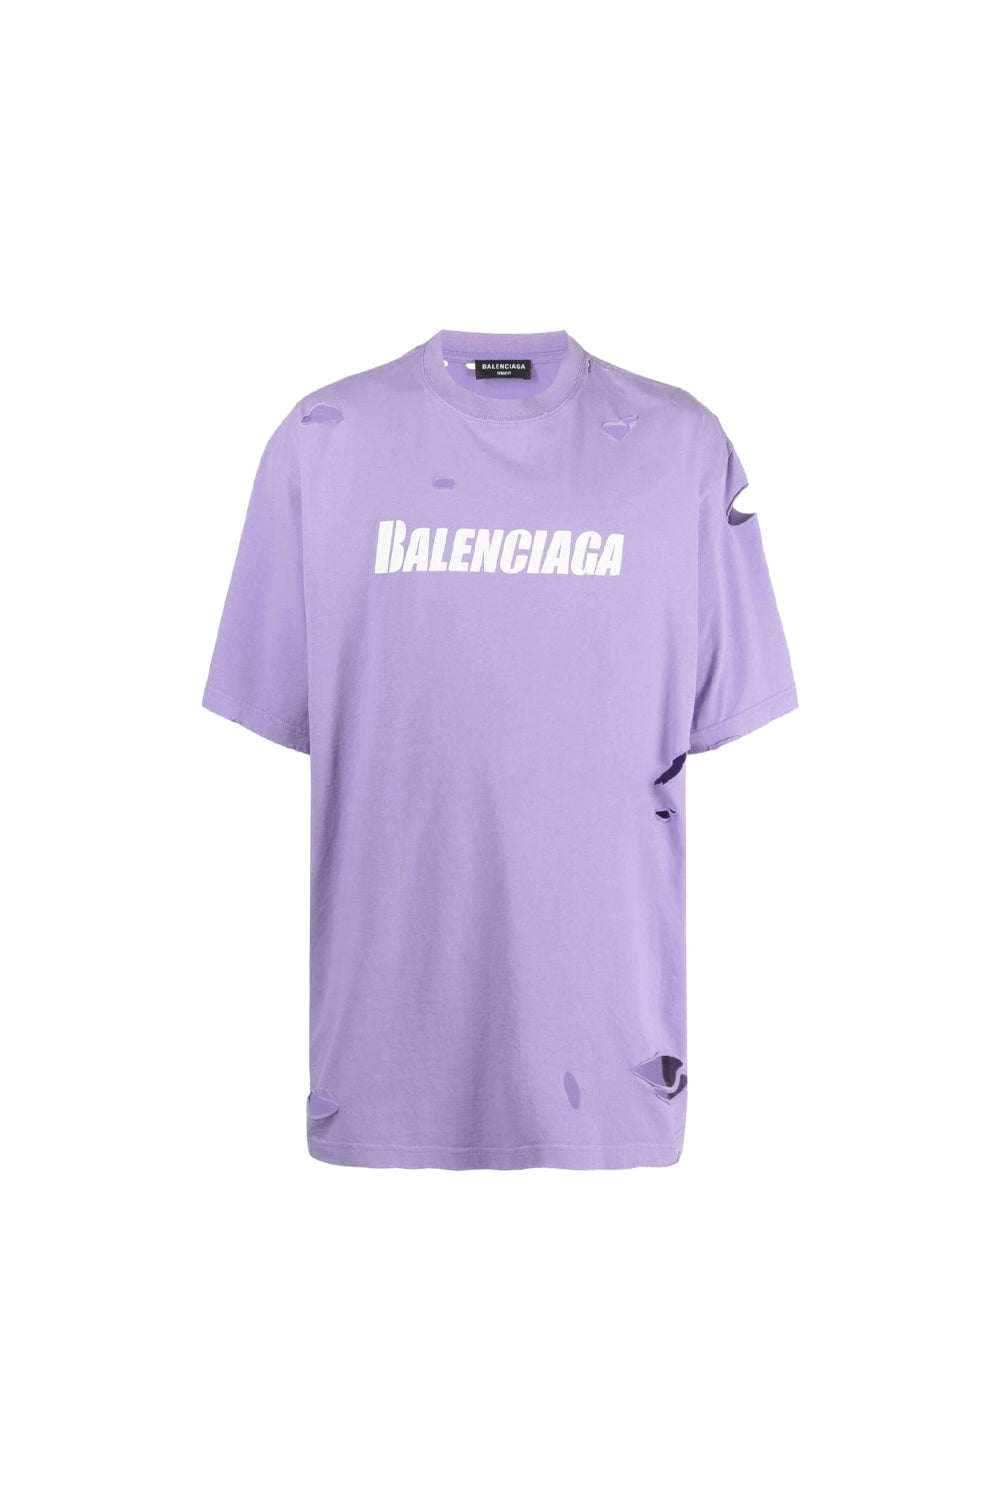 Balenciaga logo print distressed-finish T-shirt